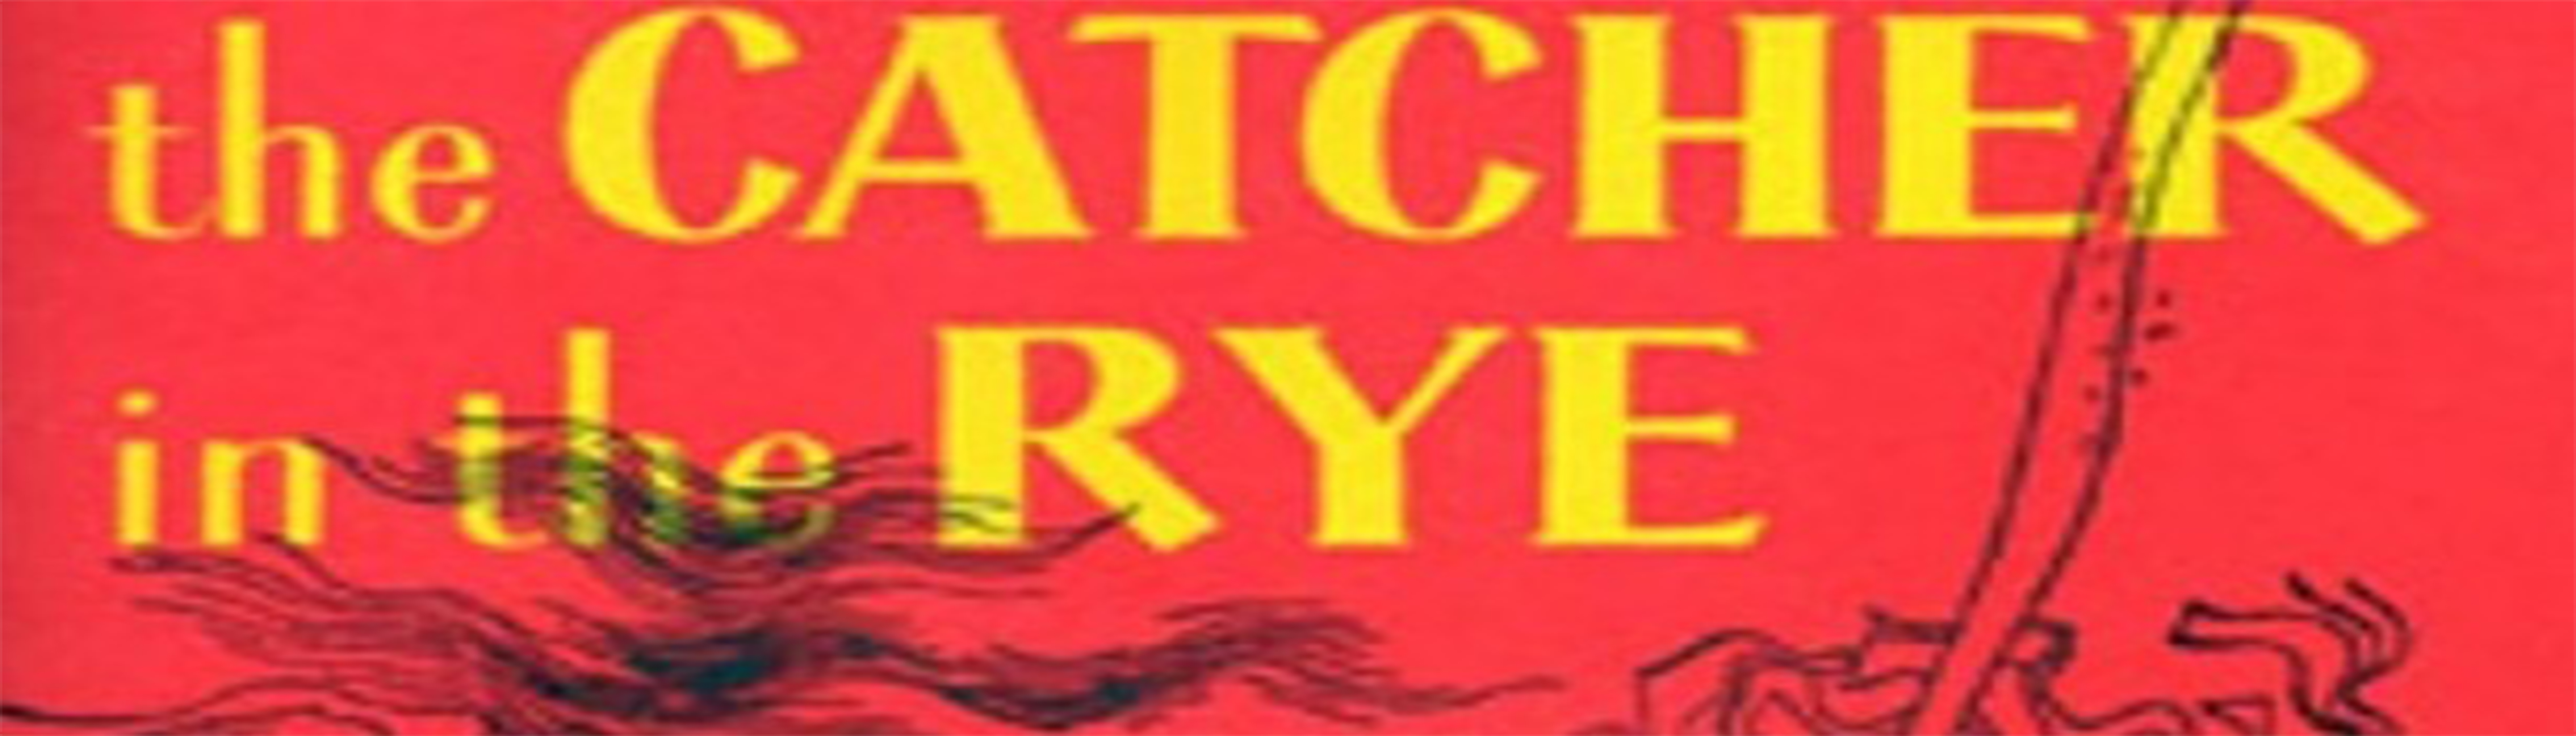 دانلود کتاب The Catcher in the Rye